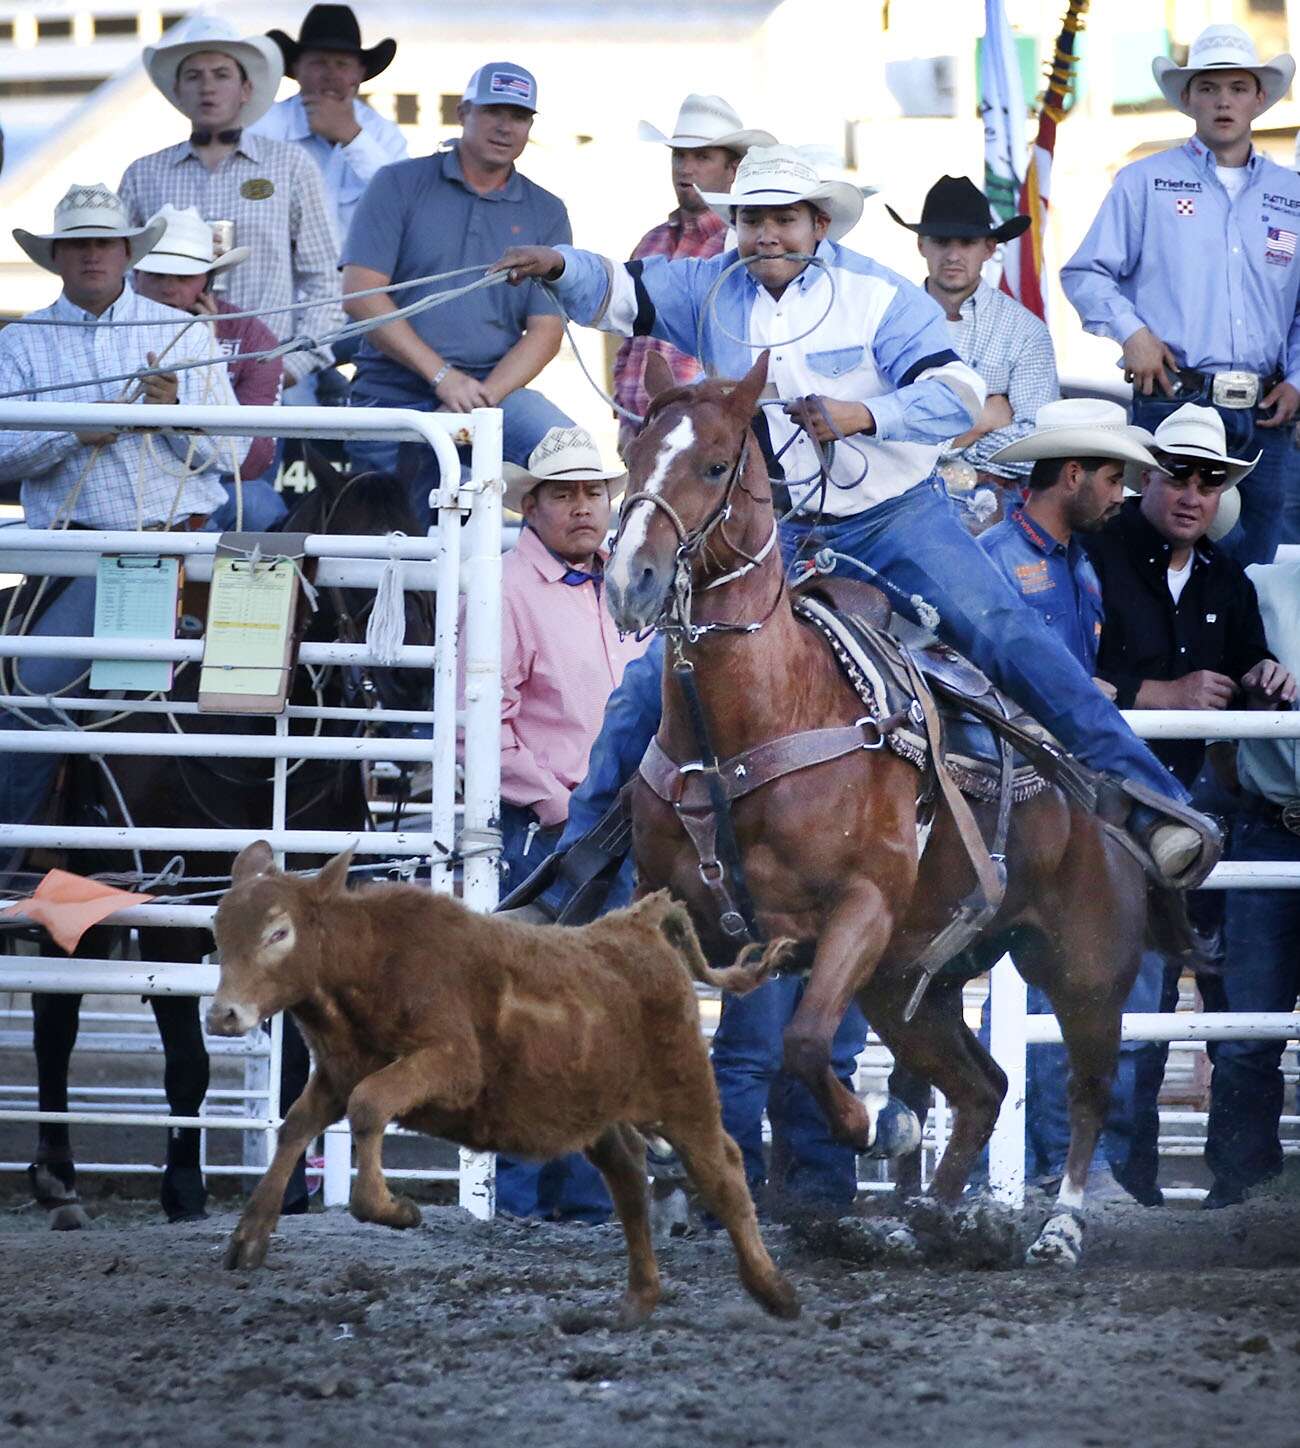 Ute Mountain rodeo entertains Friday night crowd – The Durango Herald